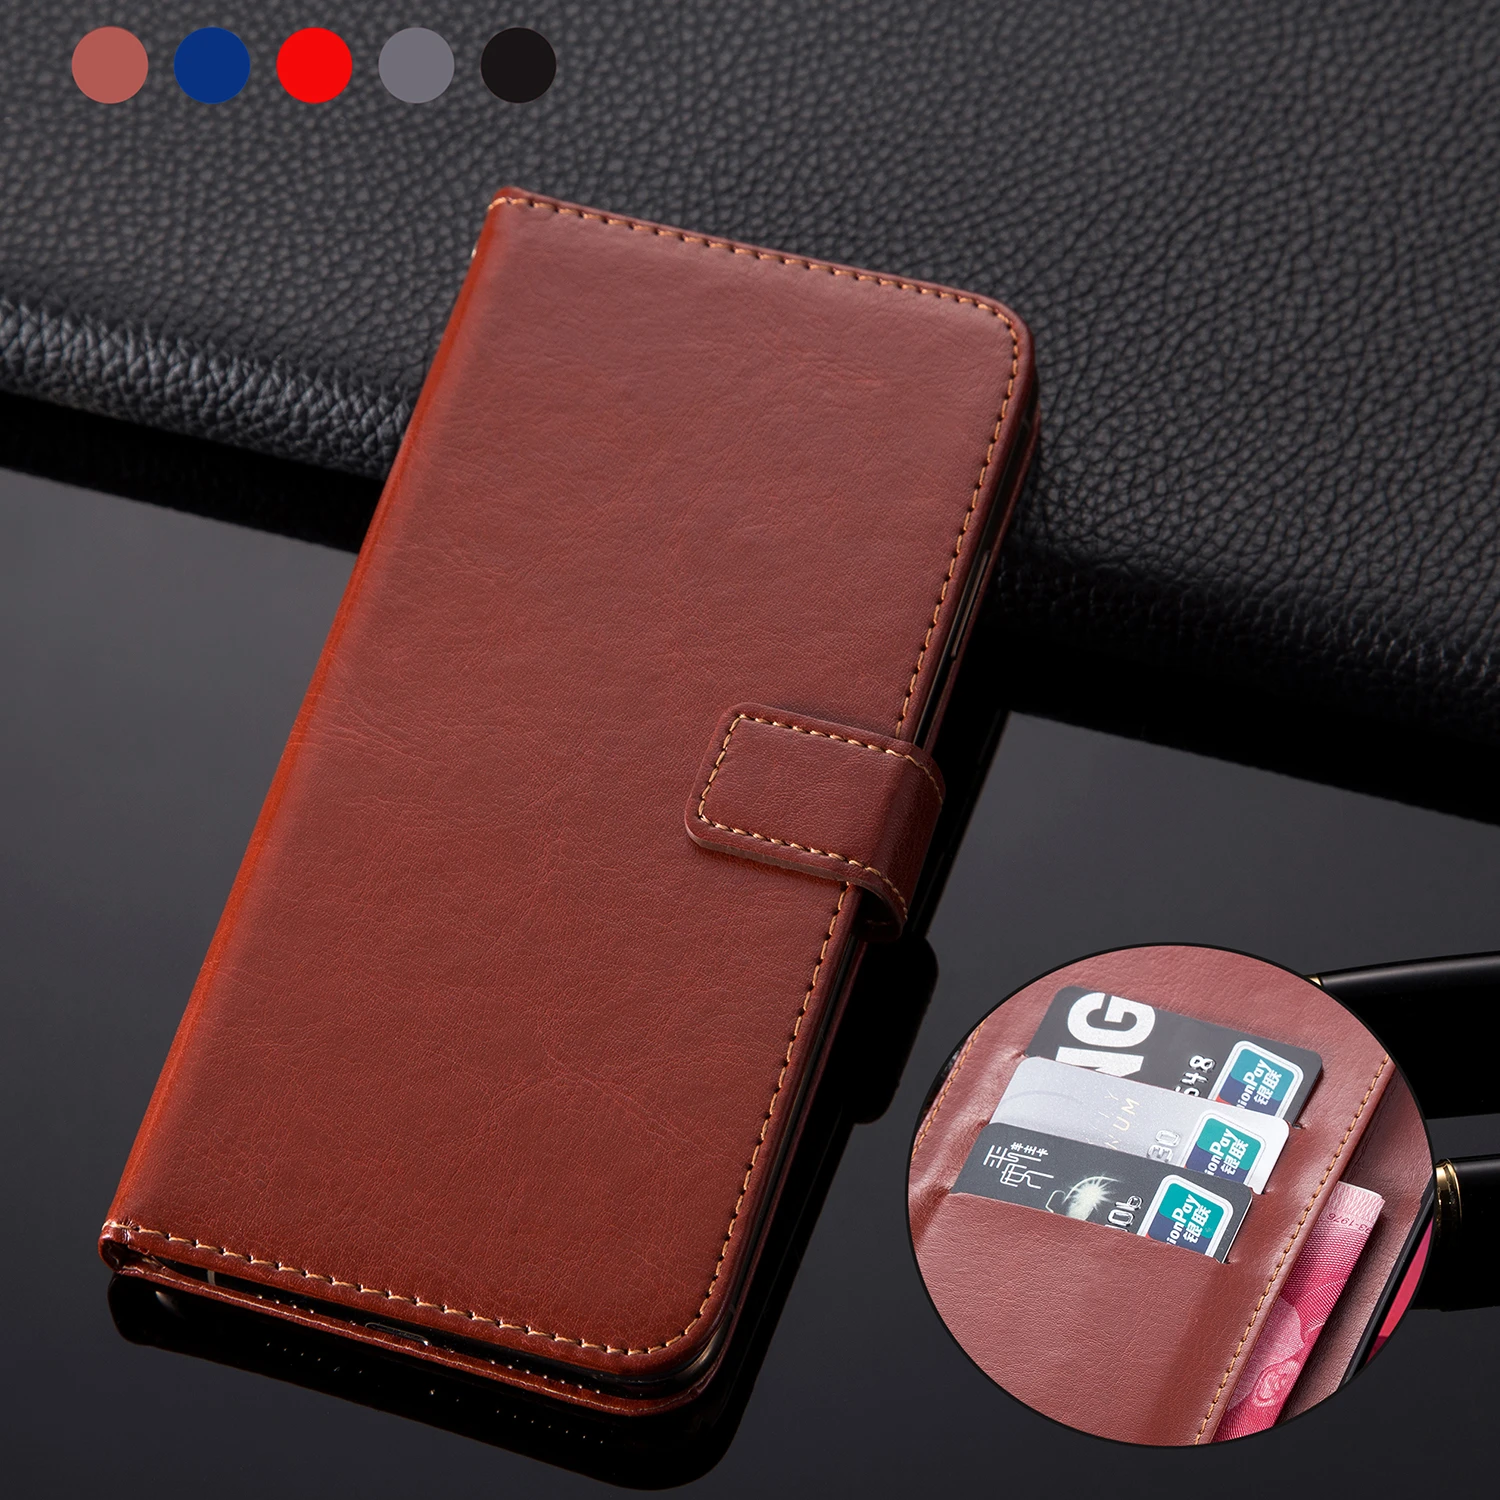 Nieuw maanjaar deur verwarring Case For LG G4 Beat H735 H735DS H735AR Case Leather Wallet Photo Frame Flip  Phone Cover for LG G4s G4 G 4 4s s H736 H731 Cases|Flip Cases| - AliExpress